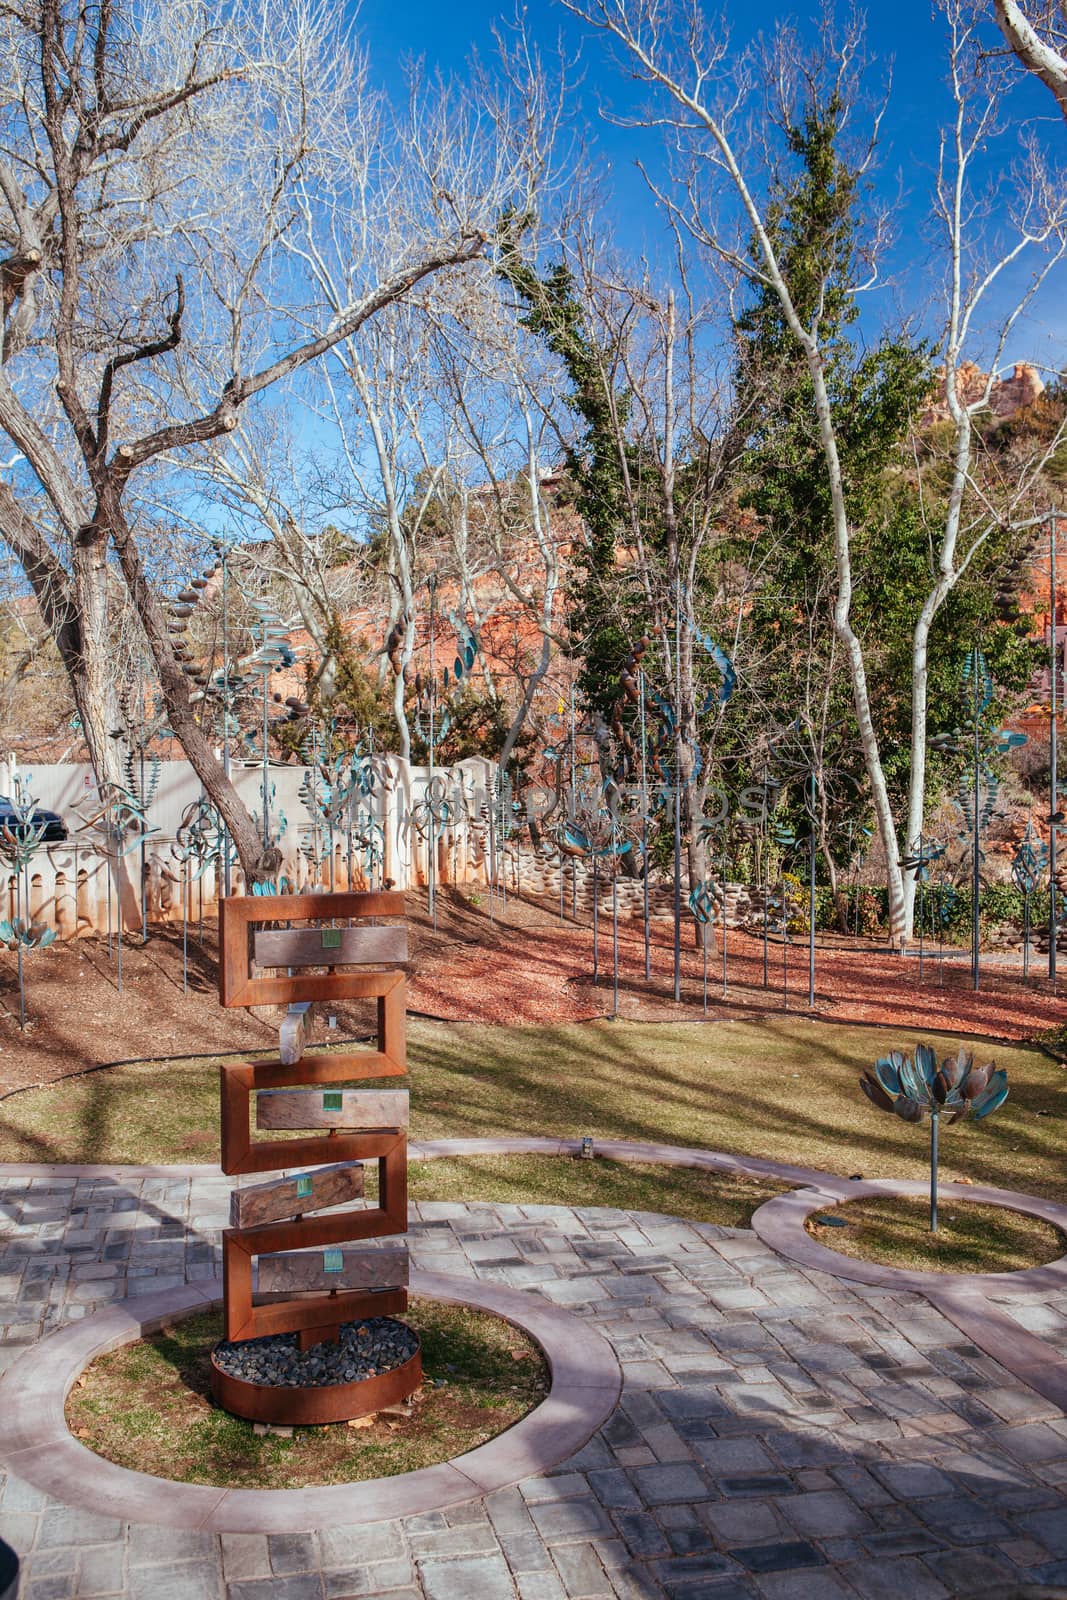 Sedona, USA - February 2 2013: The iconic Tlaquepaque Arts & Crafts Village with stunning architecture in Sedona, Arizona, USA